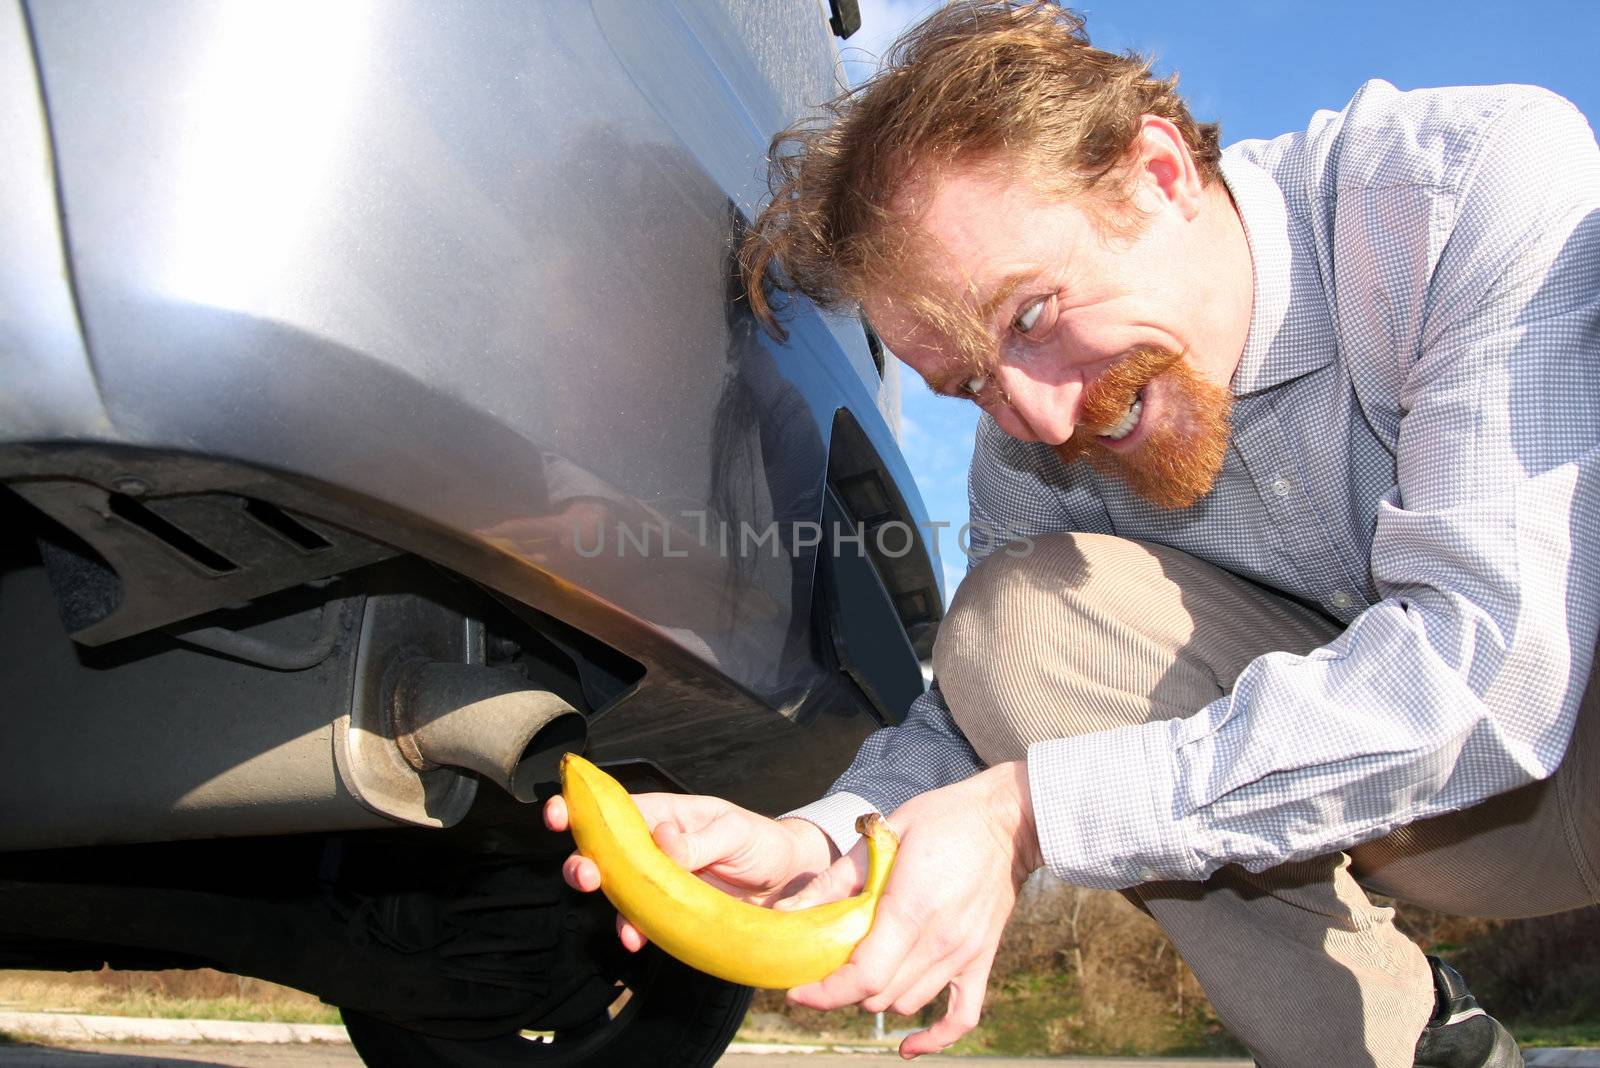 Man putting banana into car exhaust by vladacanon